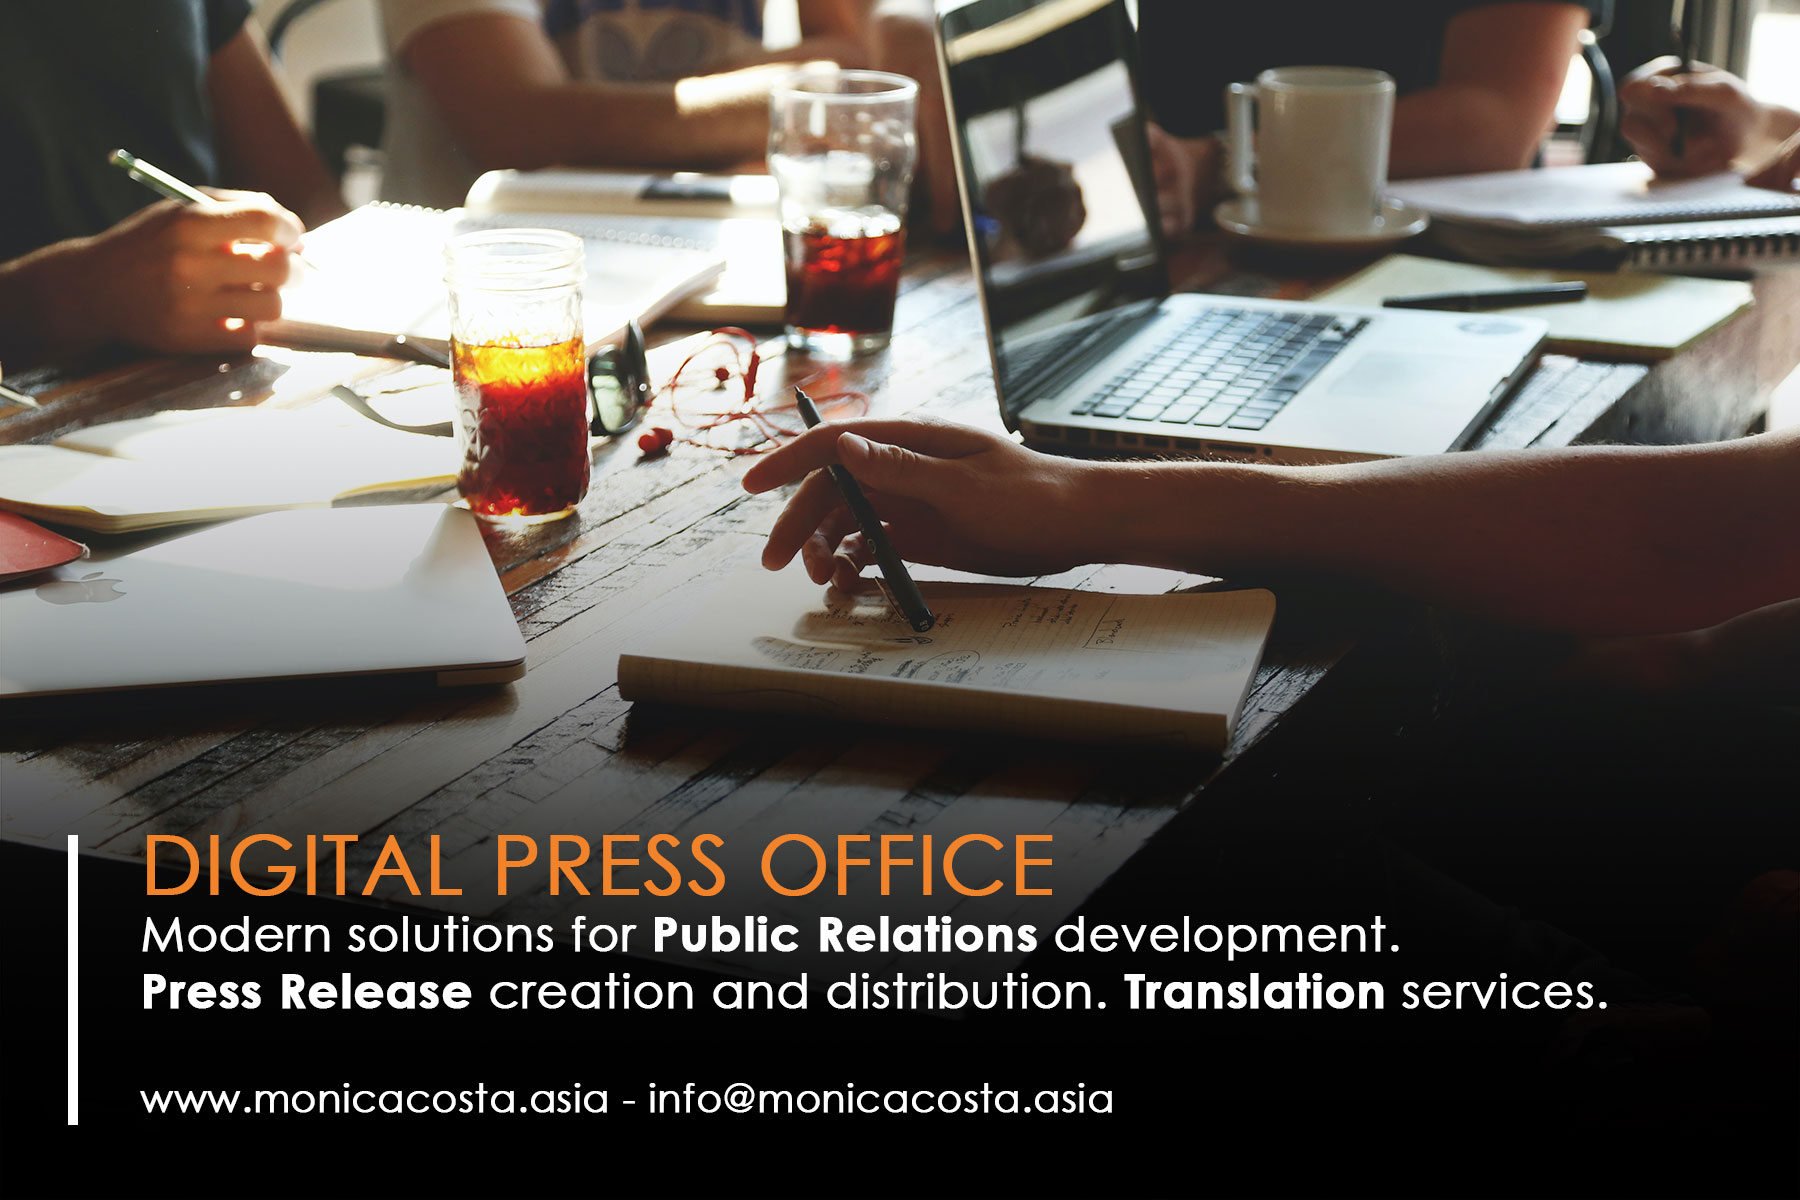 press release - press office - digital public relations